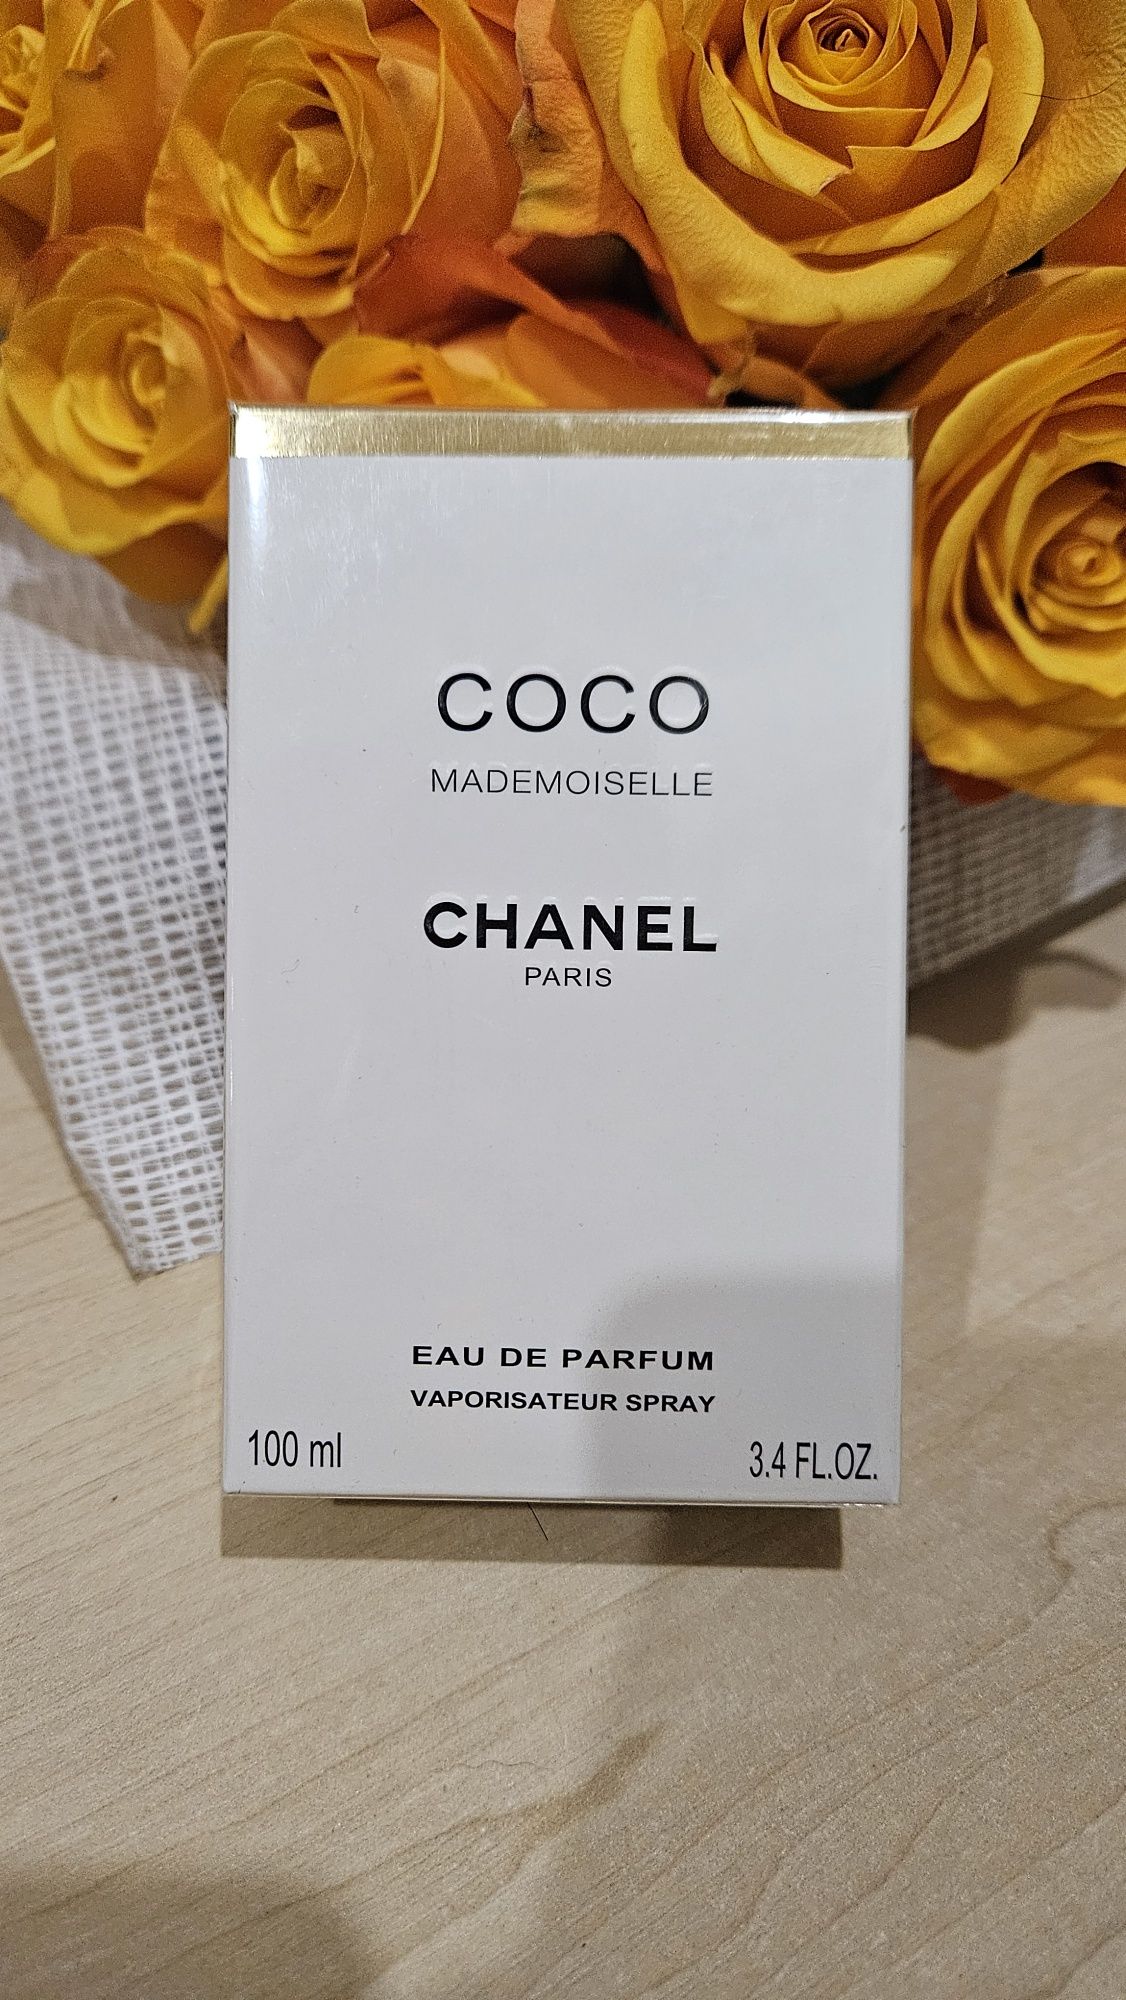 ДУХИ ПАРФУМ жіночий Chanel сосо MADEMOISELLE 100 ml